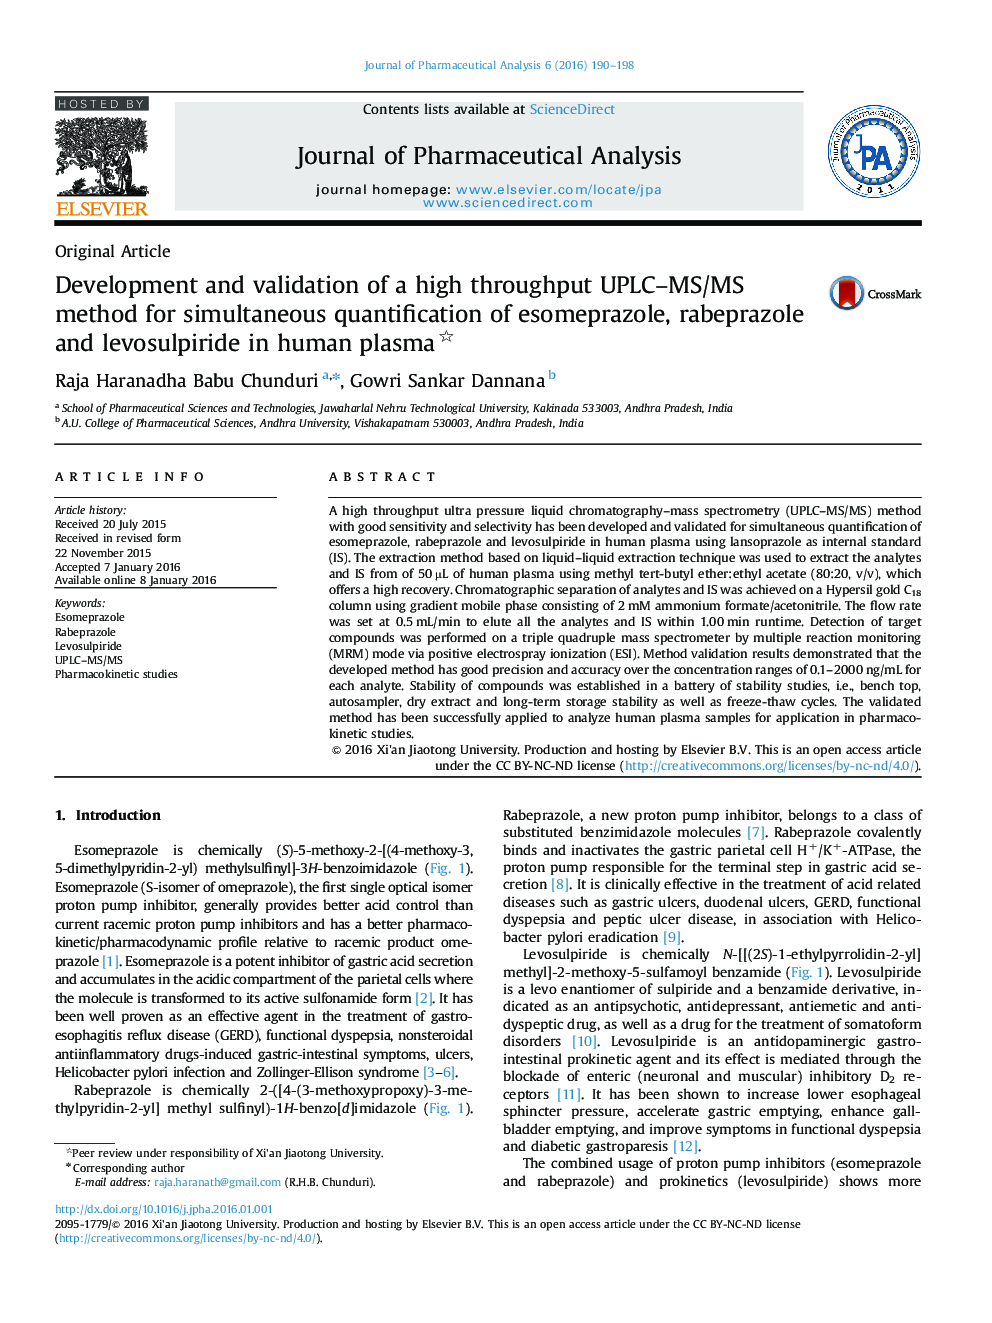 Development and validation of a high throughput UPLC–MS/MS method for simultaneous quantification of esomeprazole, rabeprazole and levosulpiride in human plasma 